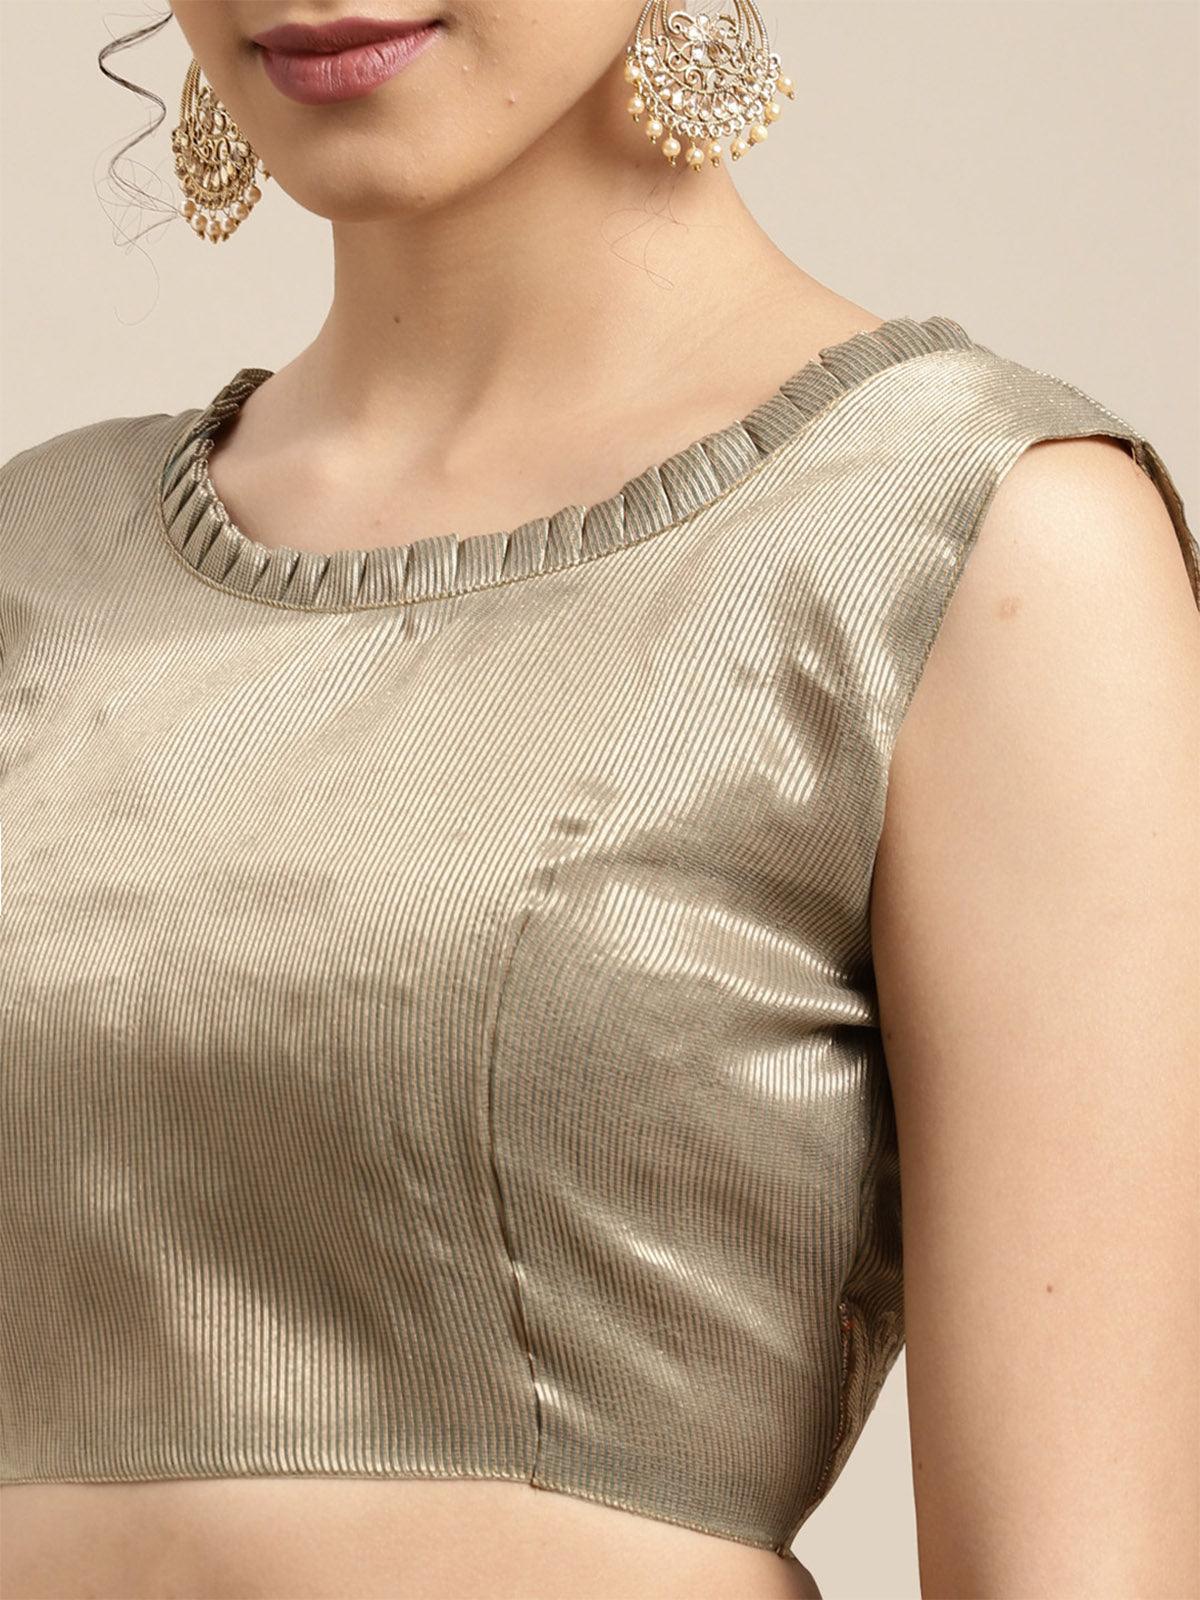 Women's Linen Blend Sea Green Woven Design Designer Saree With Blouse Piece - Odette